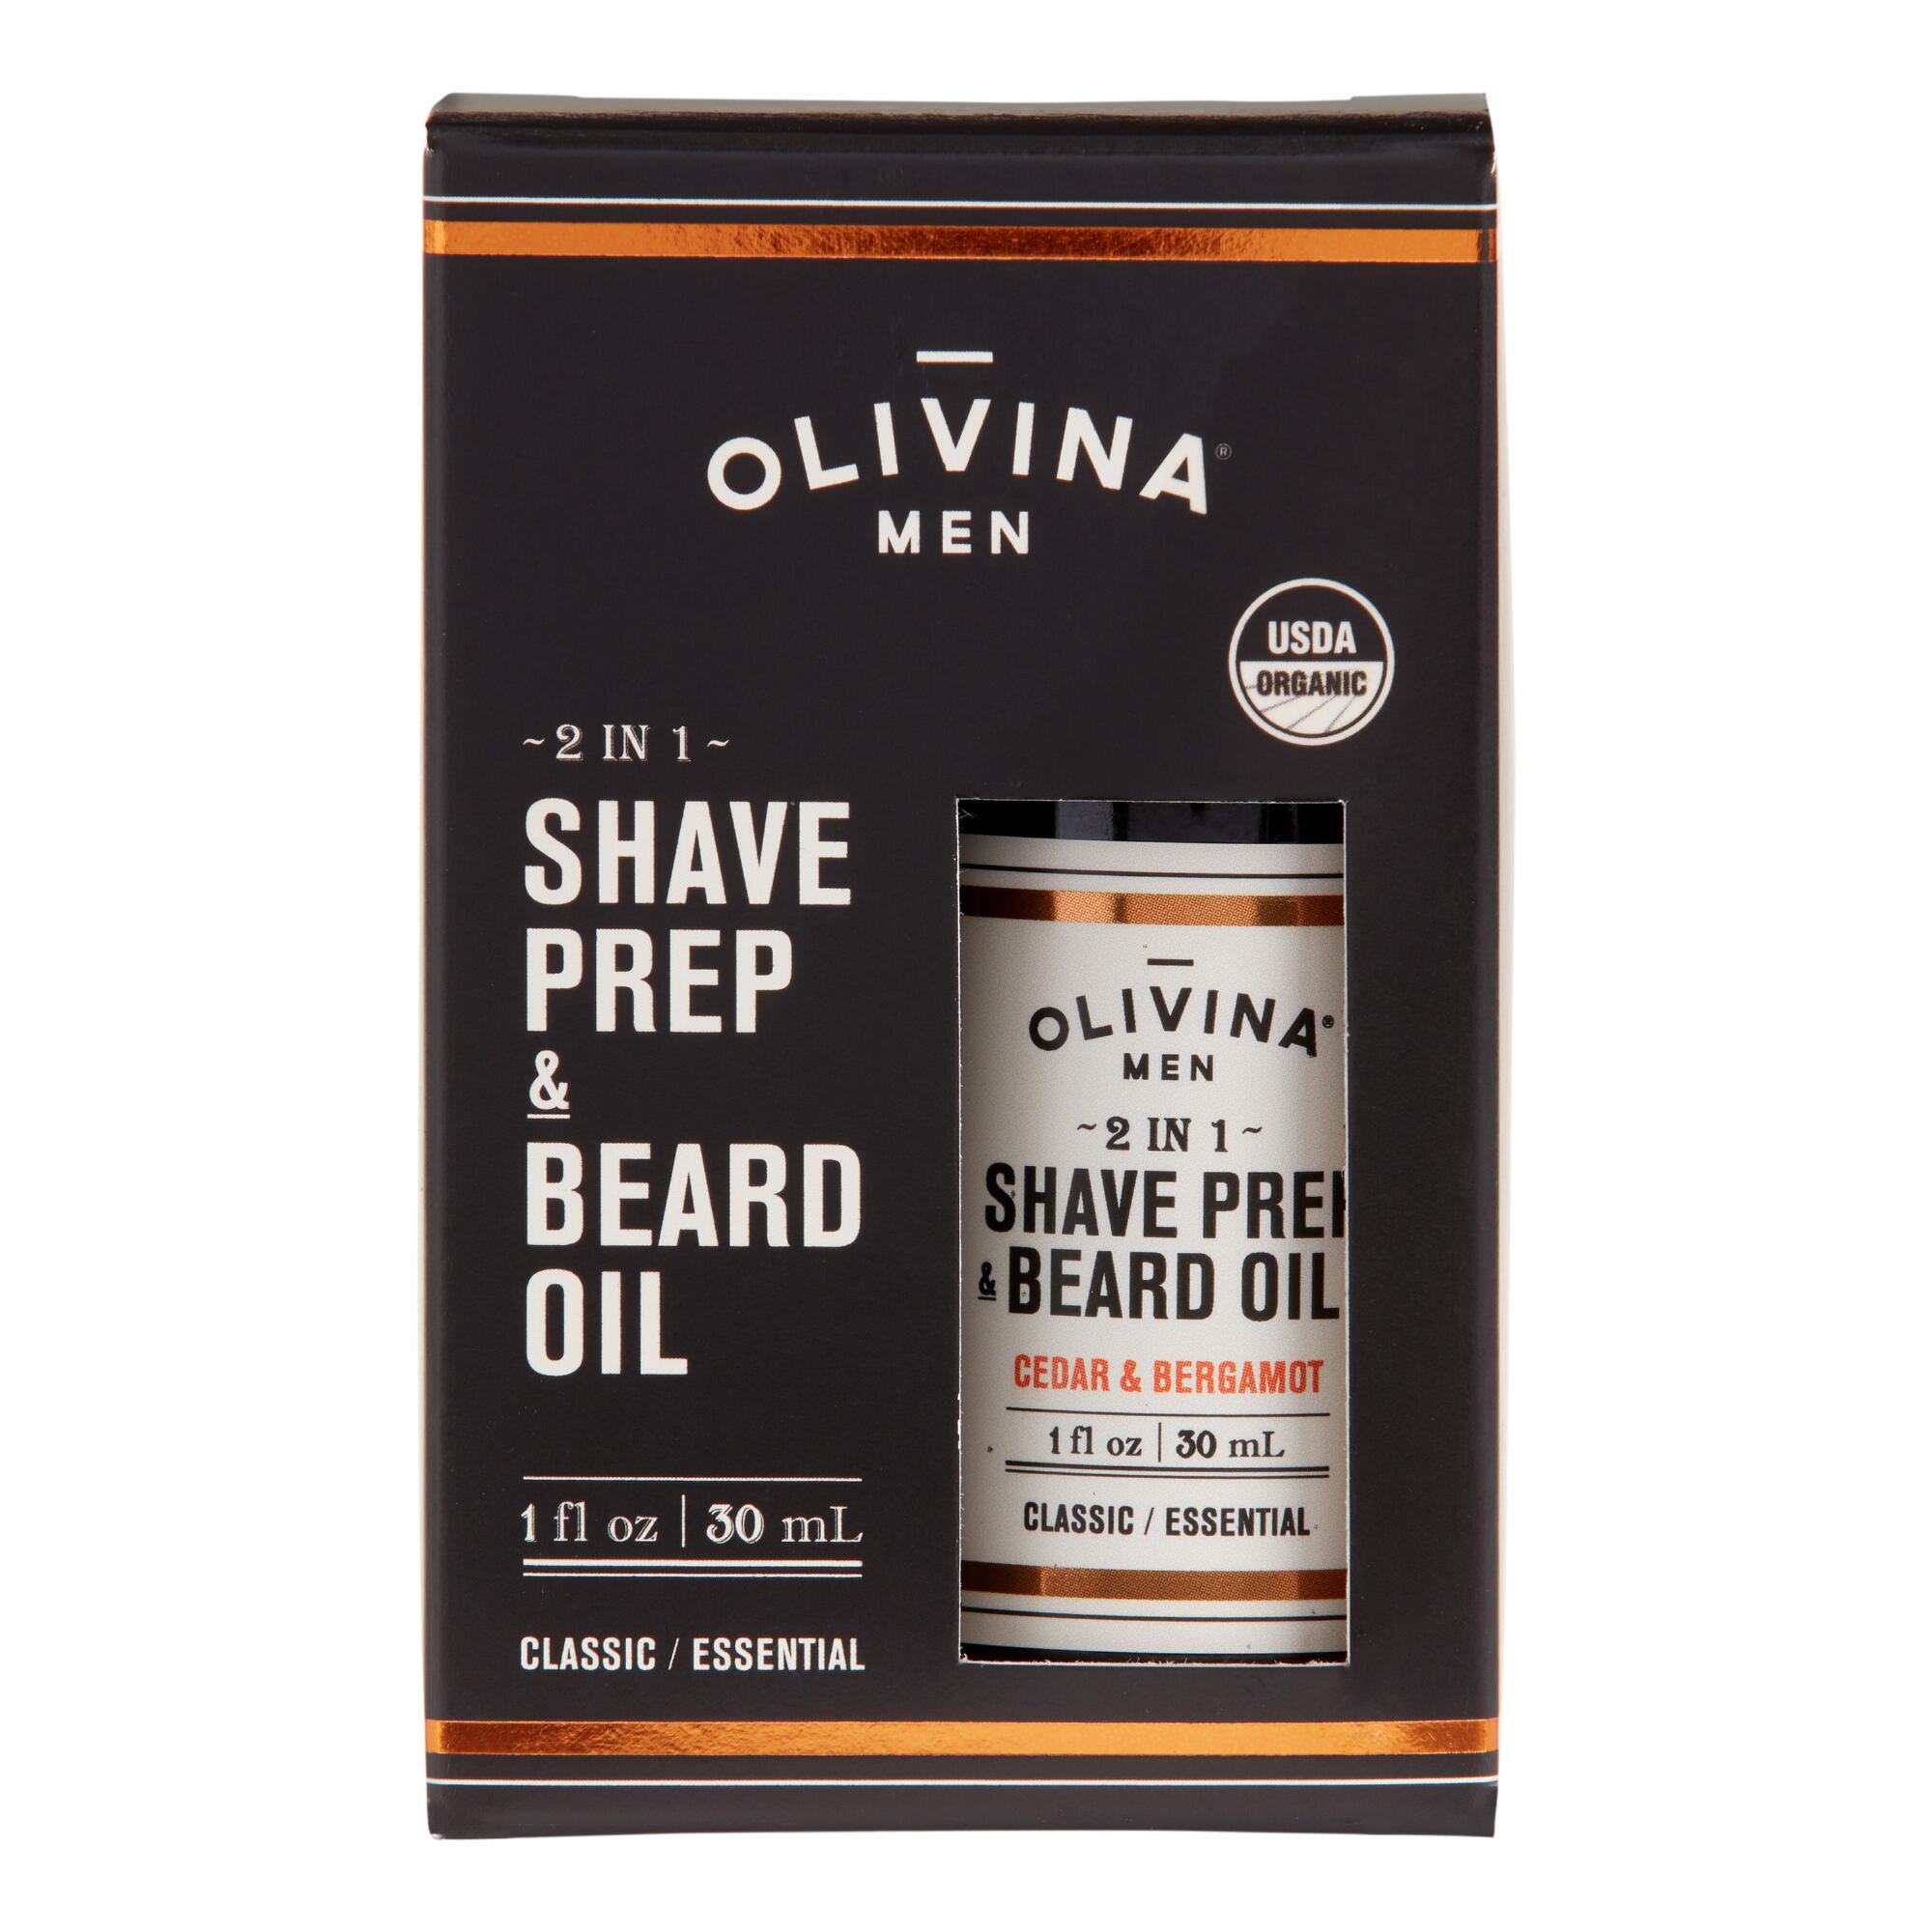 Olivina Men's Organic Shave Prep and Beard Oil by World Market